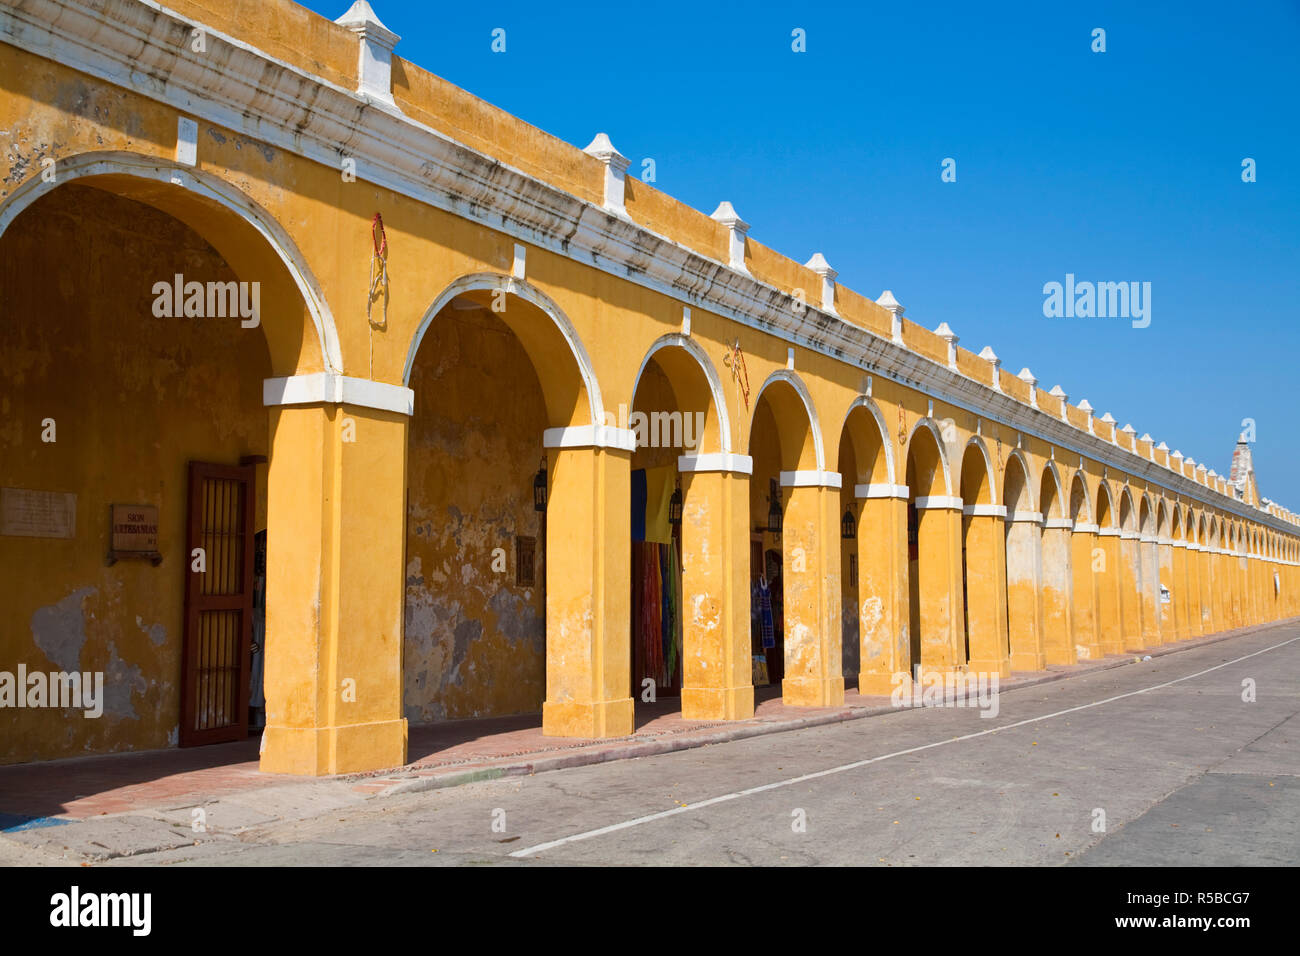 Colombia, Bolivar, Cartagena De Indias, Las Bovedas, - dungeons built in the city walls now craft and souvenir shops Stock Photo